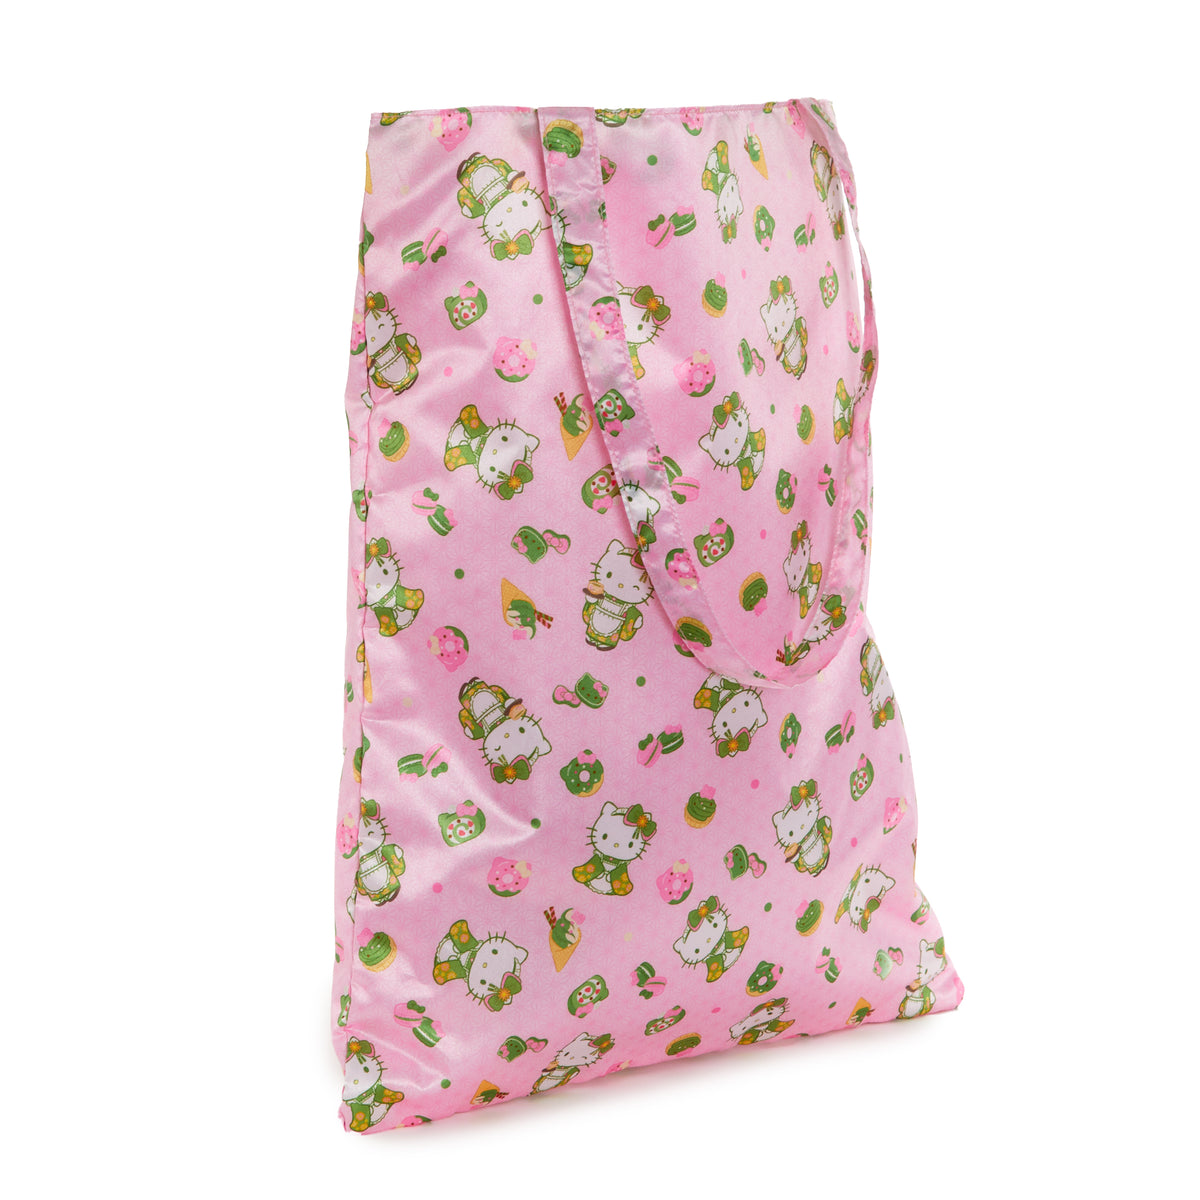 Hello Kitty Tote Bag (Matcha Sweets Series) Bags NAKAJIMA CORPORATION   